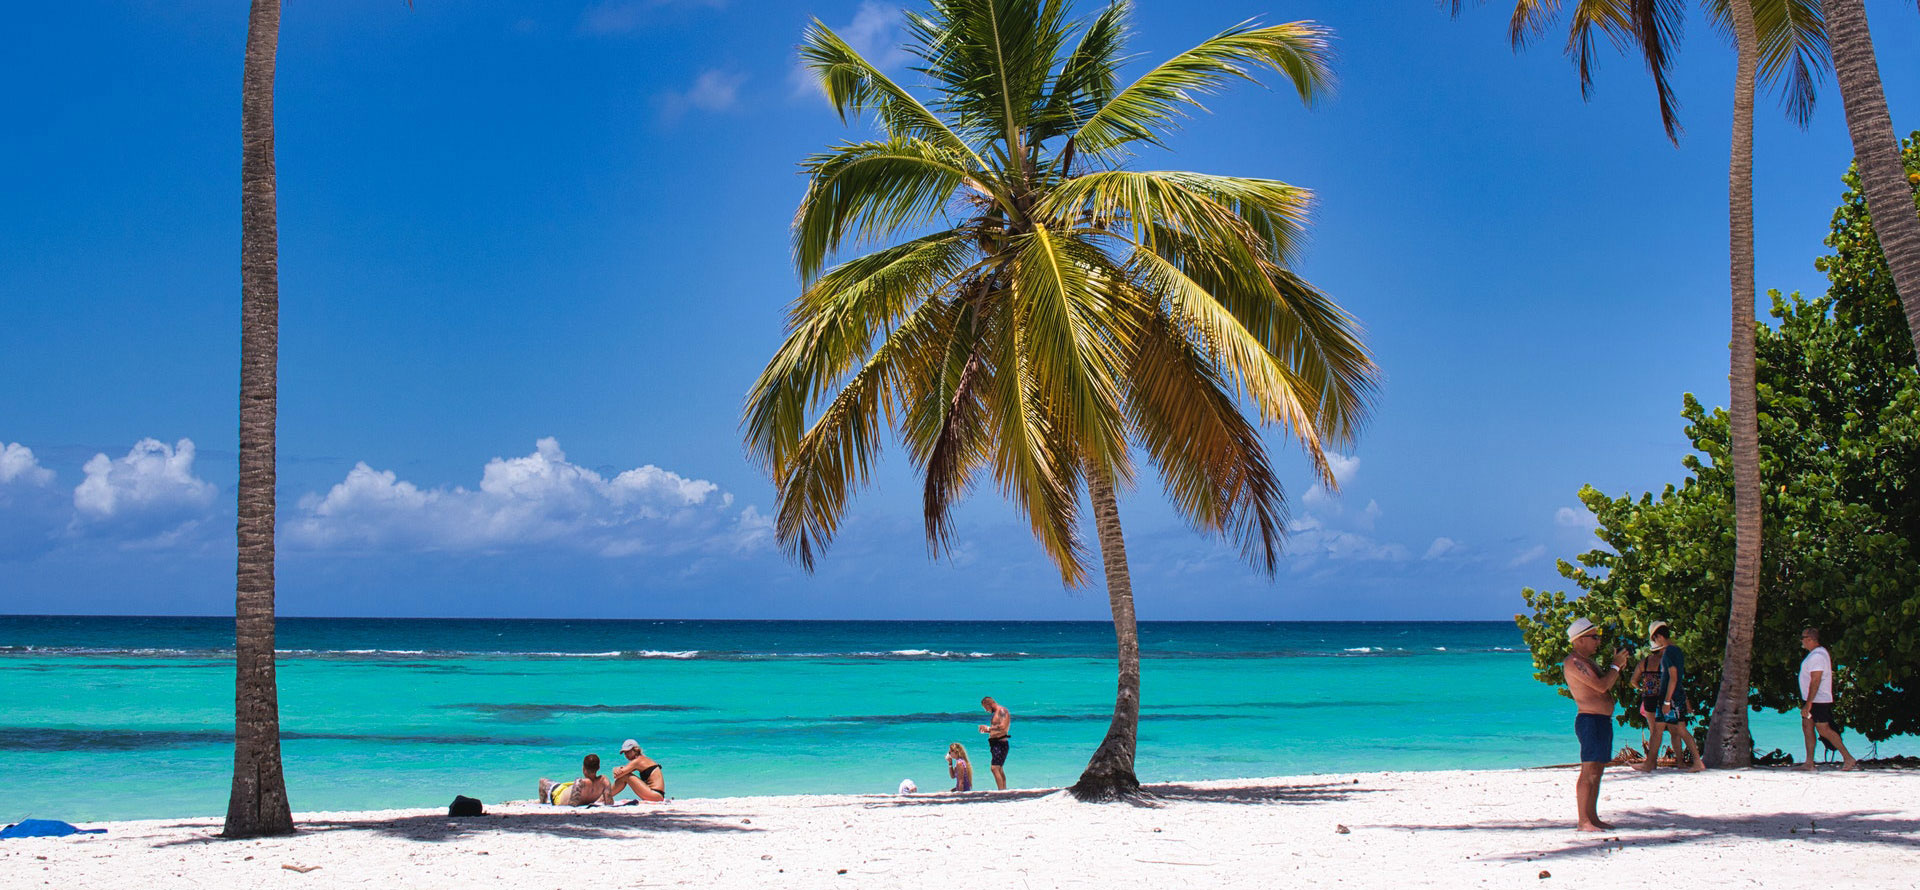 Palmtree in Barbados.